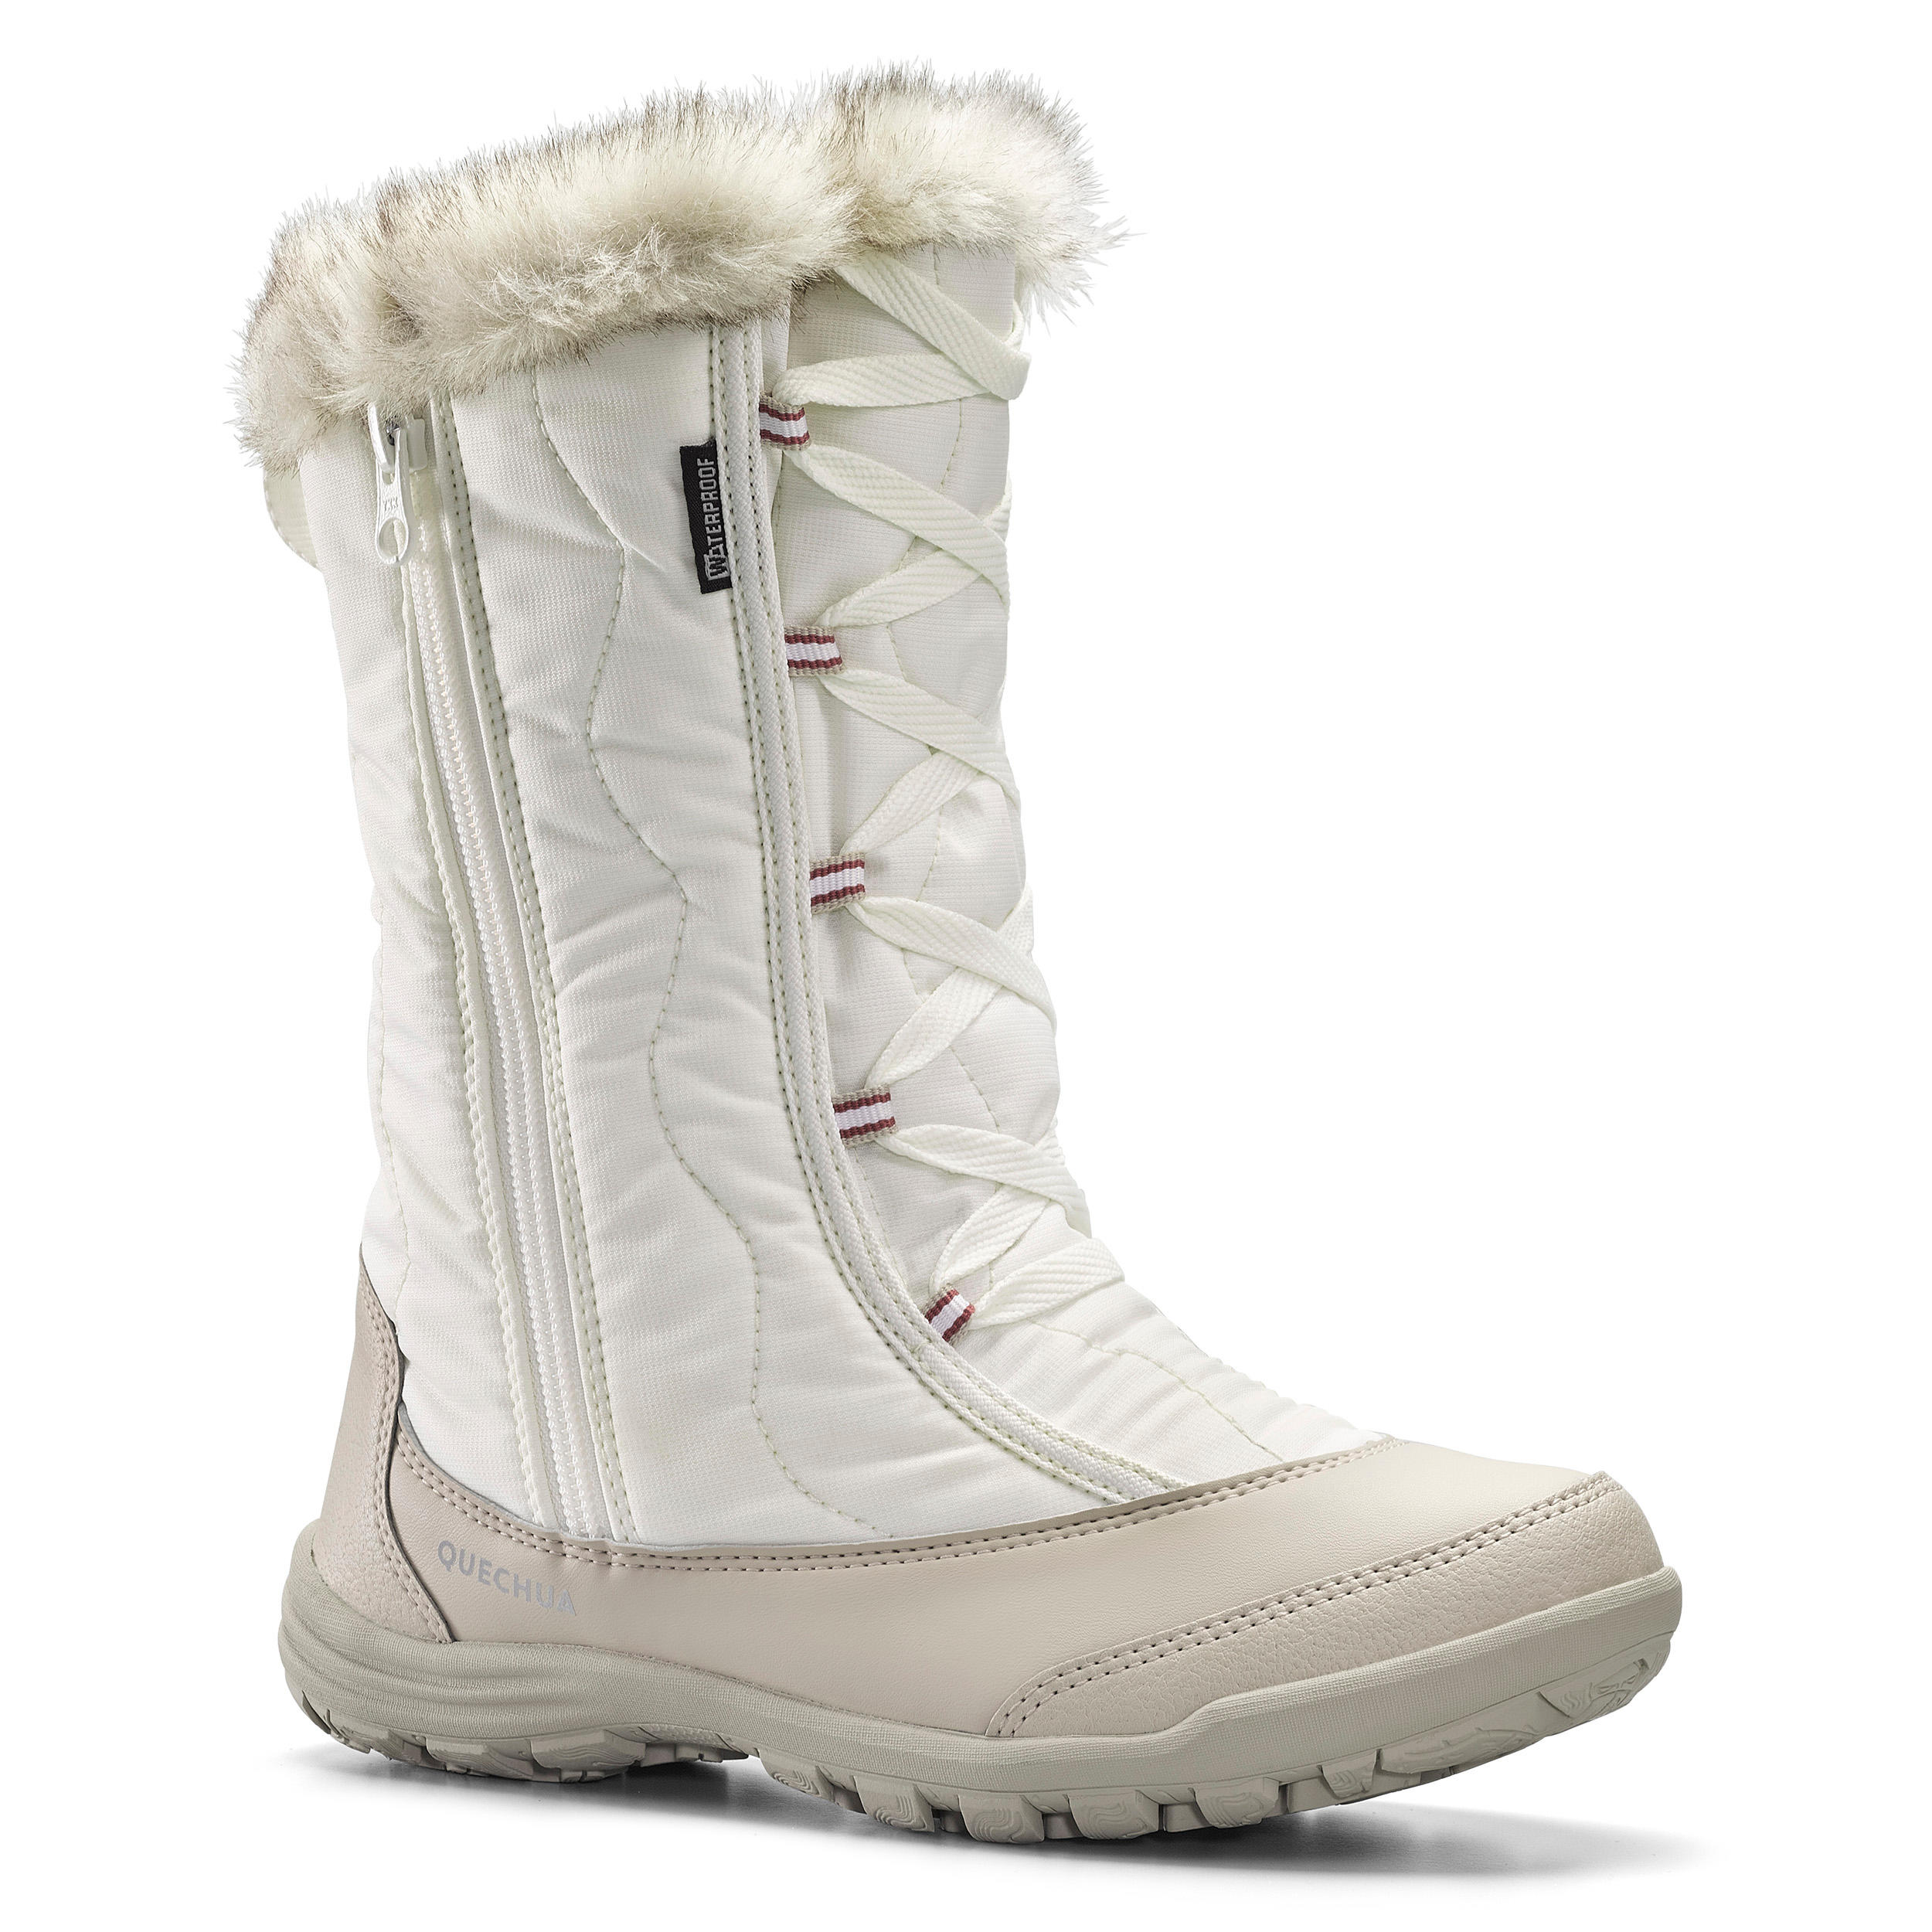 Kids’ Warm Waterproof Hiking Snow Boots SH500 X-Warm Zip Sizes 11.5 - 5.5 1/4